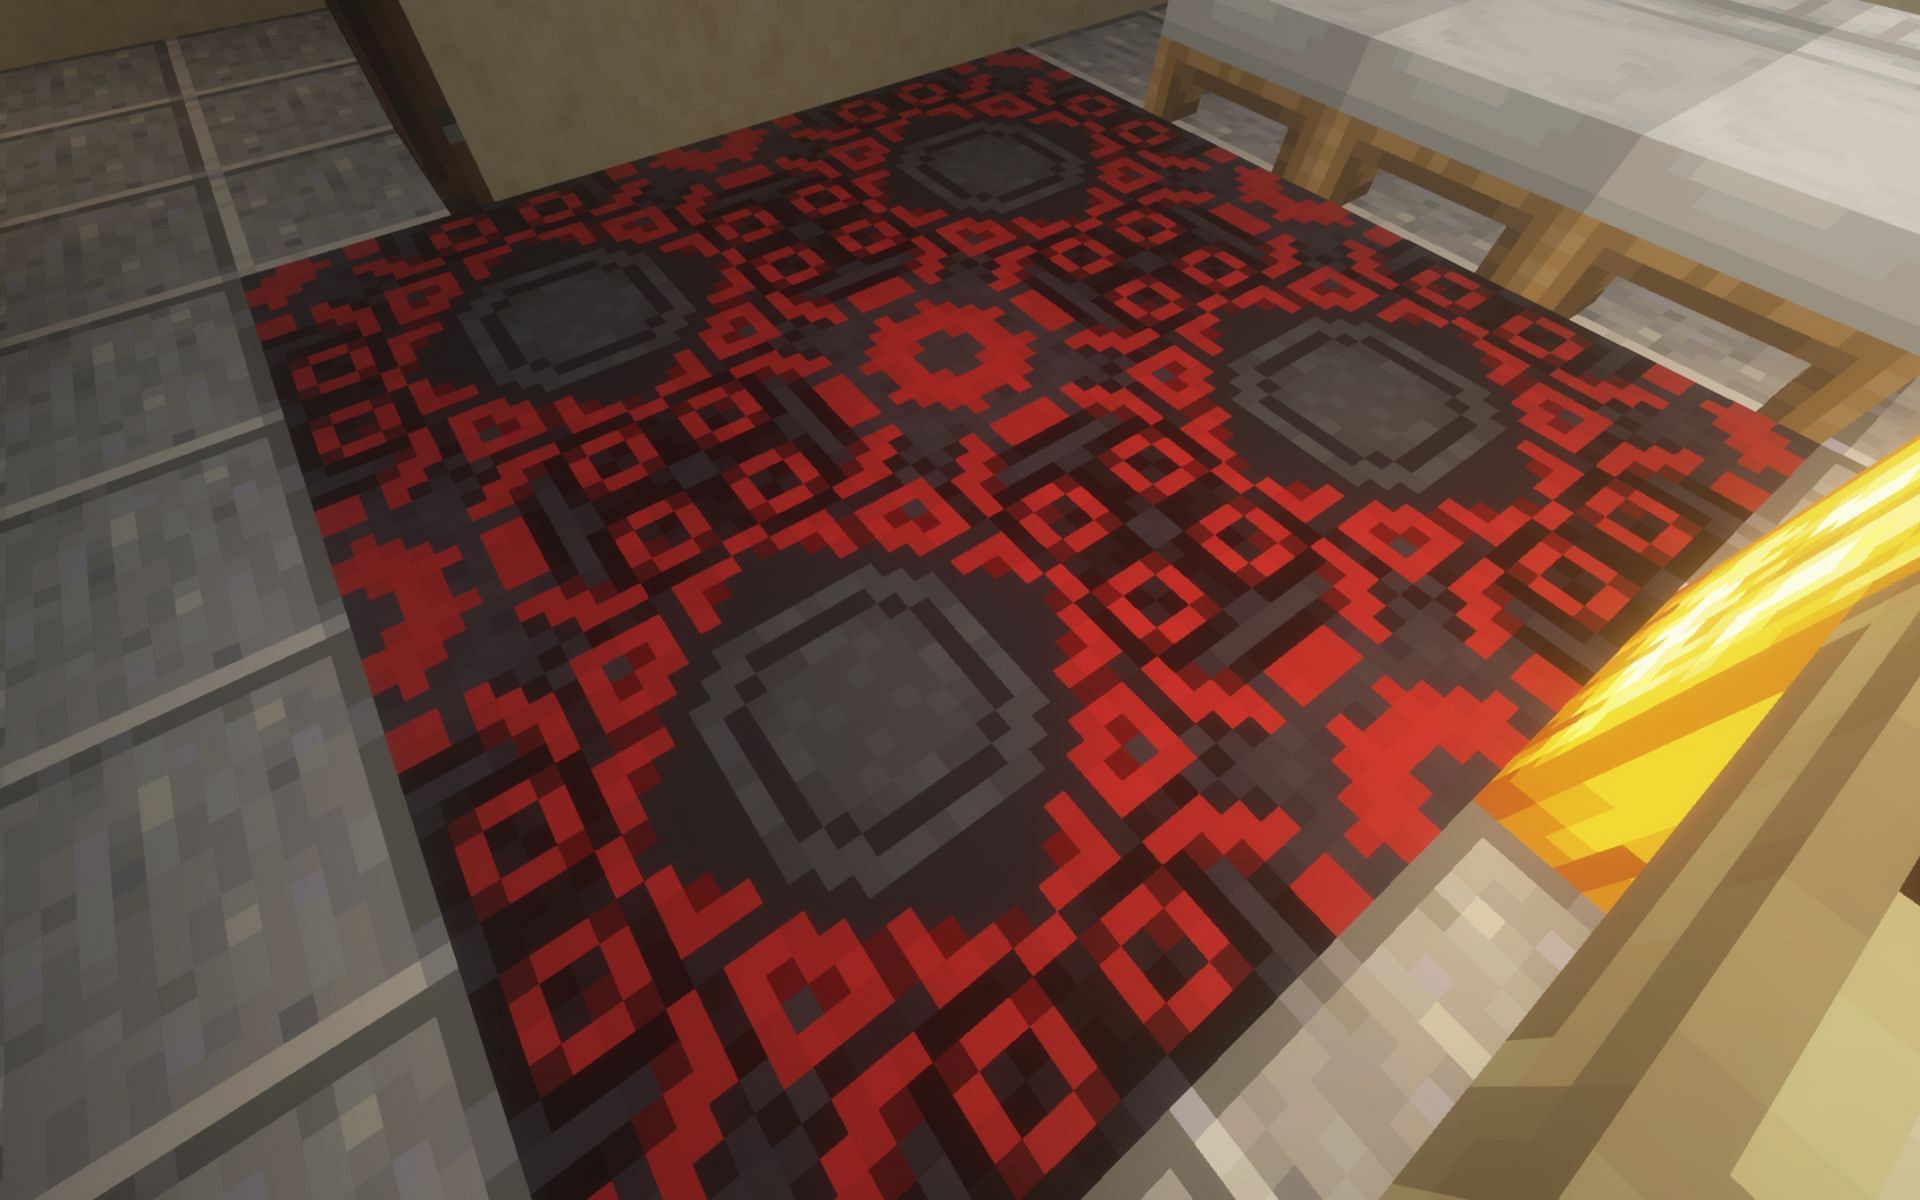 Glazed Terracotta floor (Image via Minecraft)